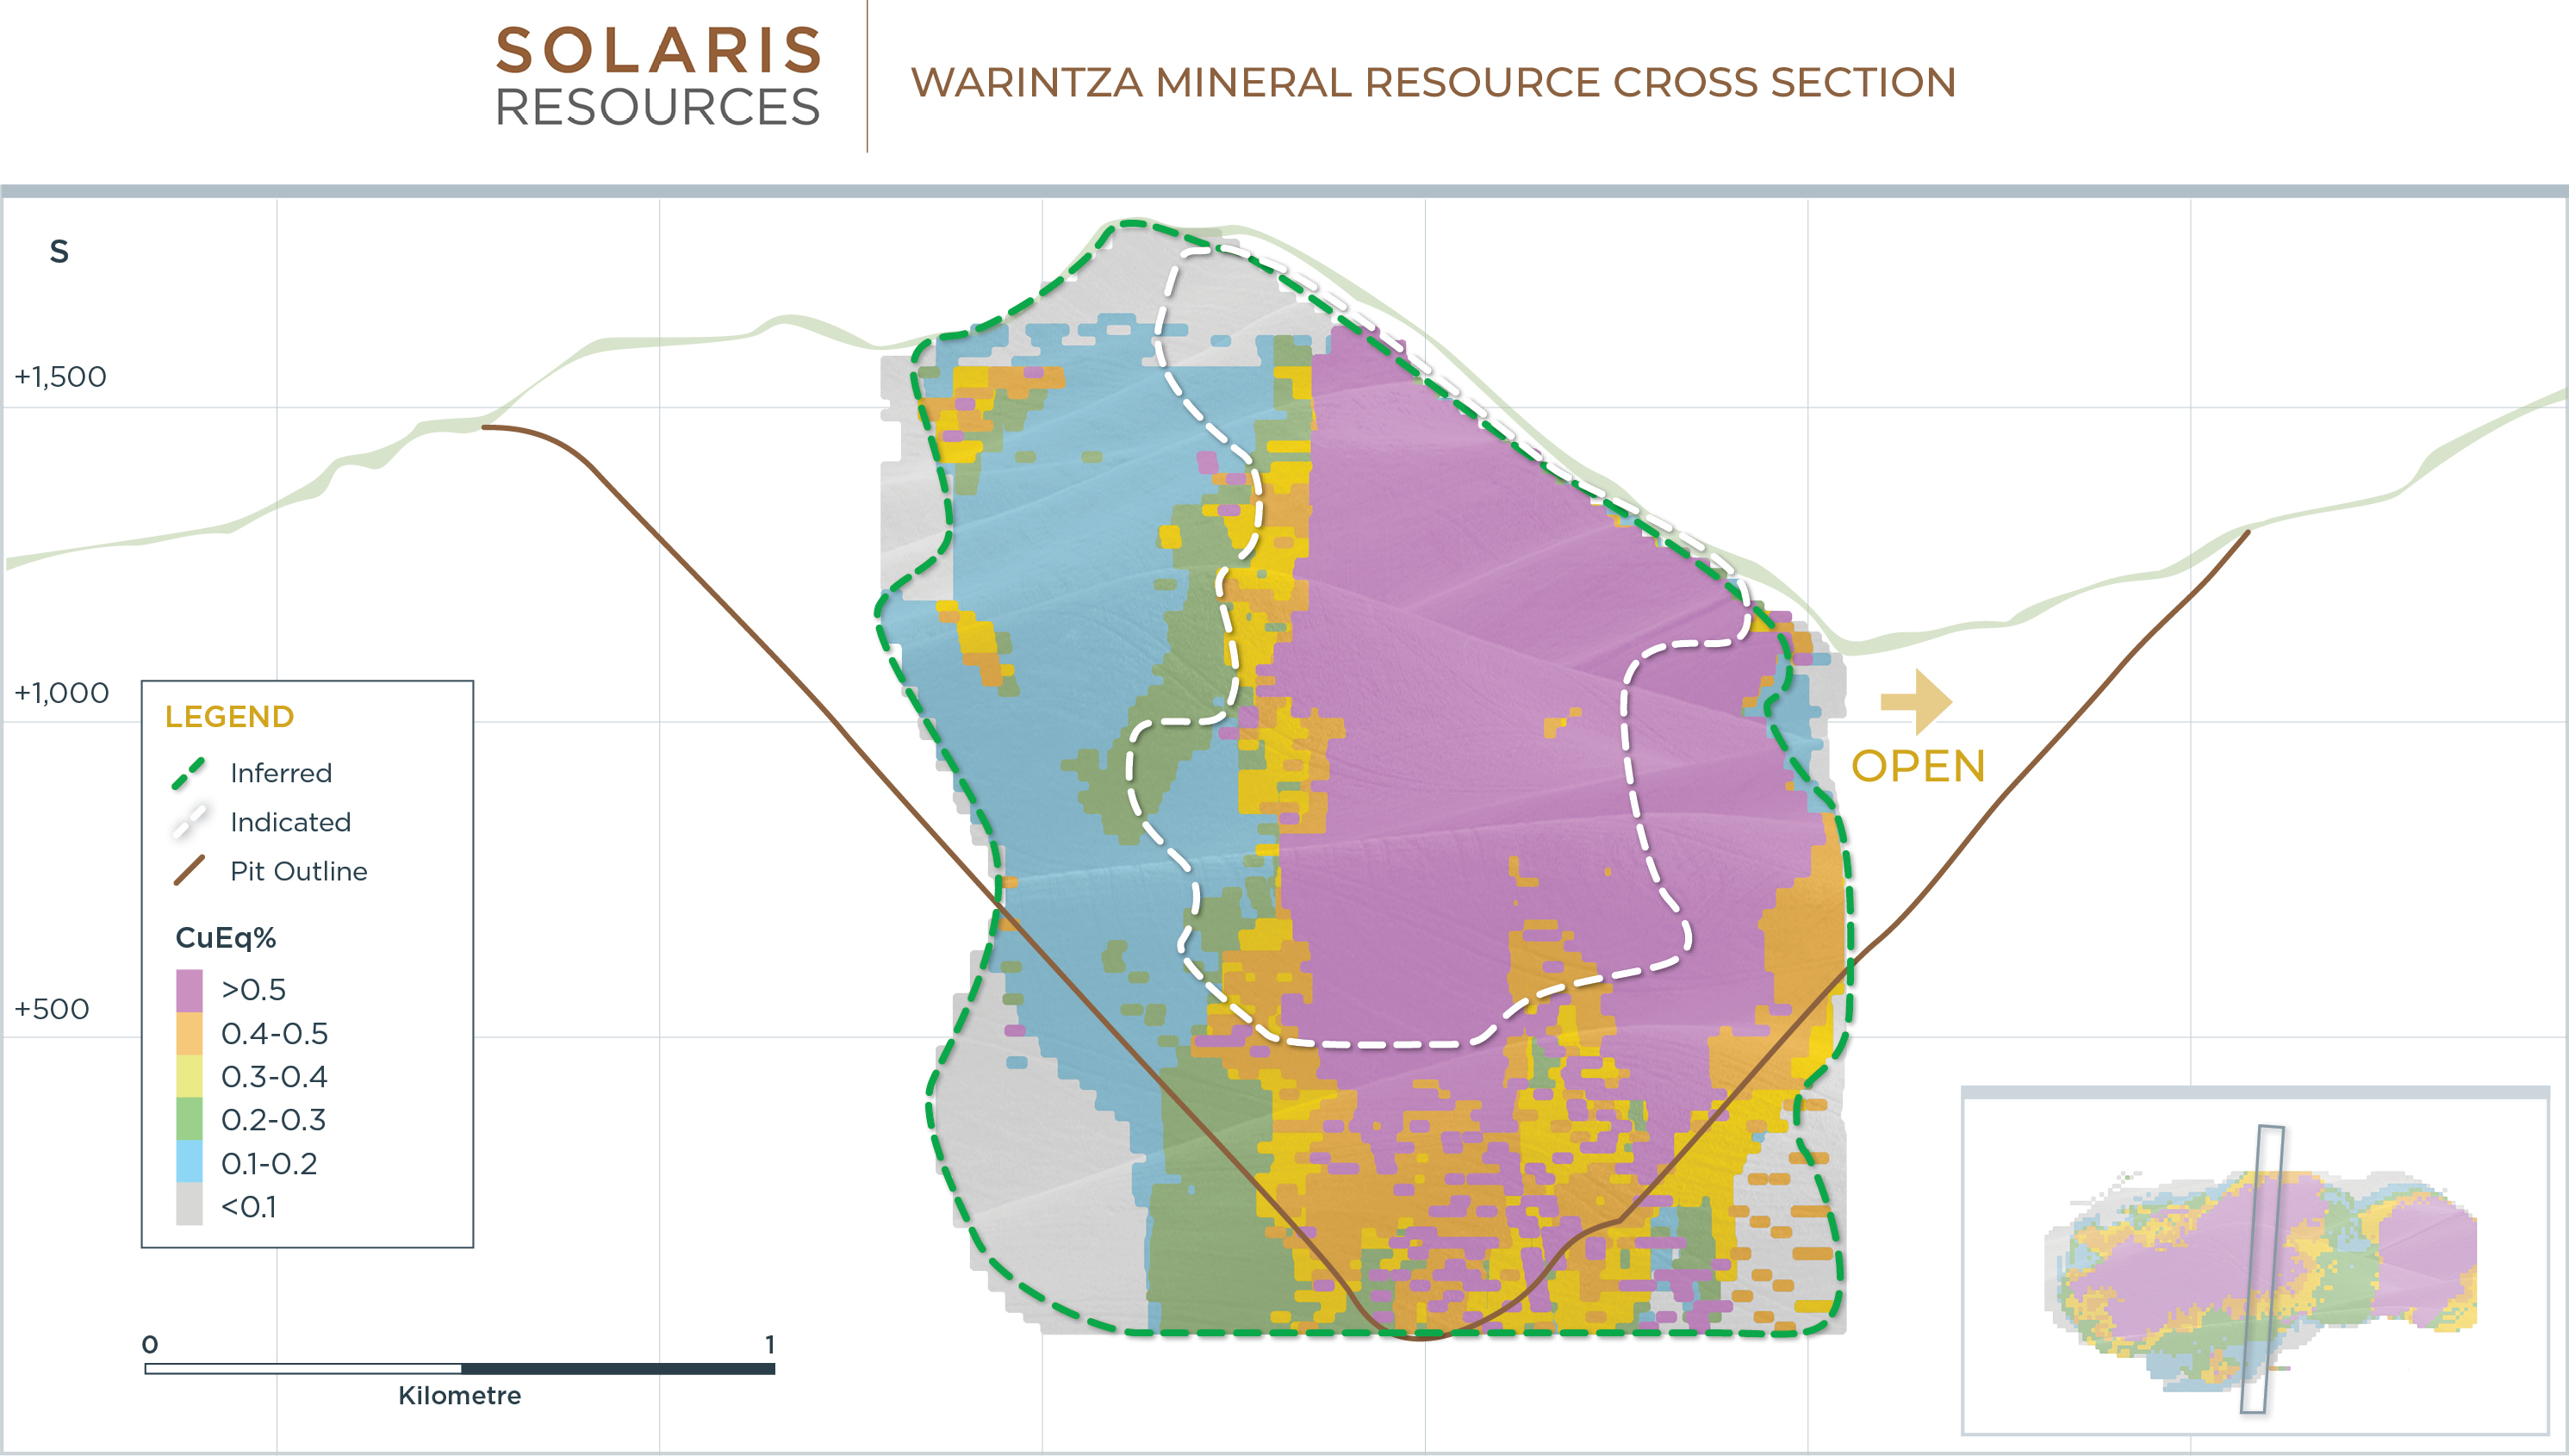 Figure 3 – Warintza Mineral Resource Cross Section